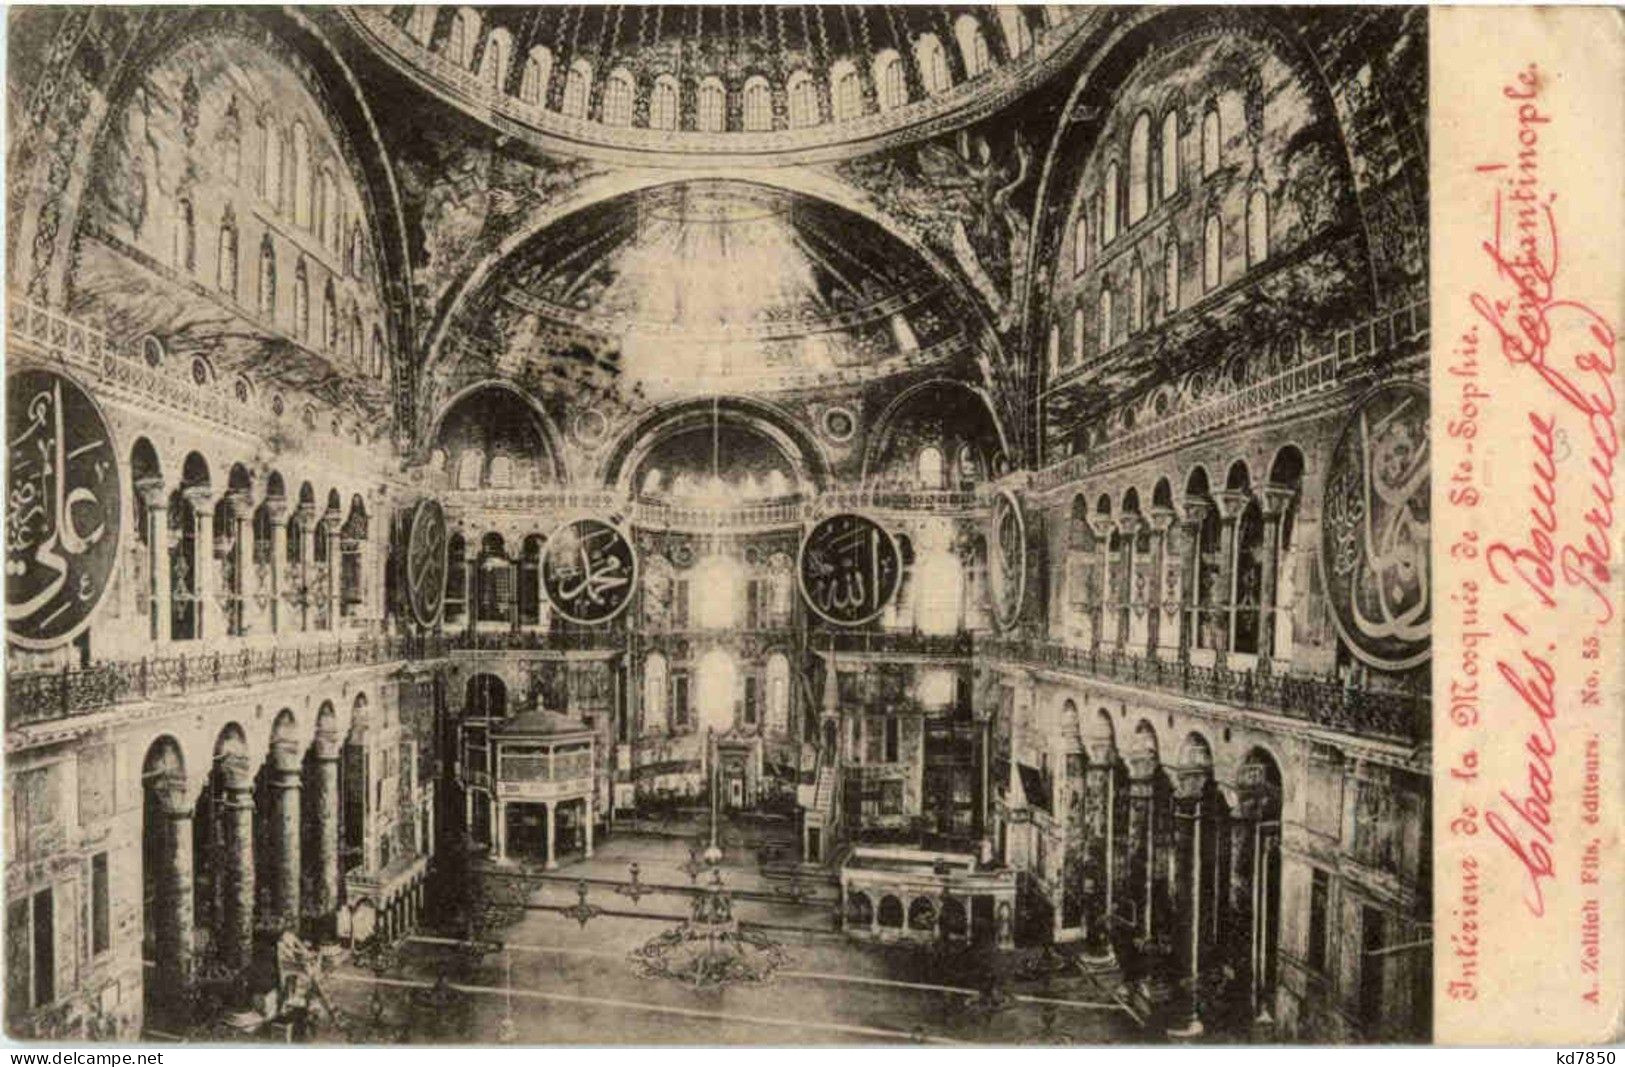 Constantinople - Mosque De Ste Sophie - Turquia